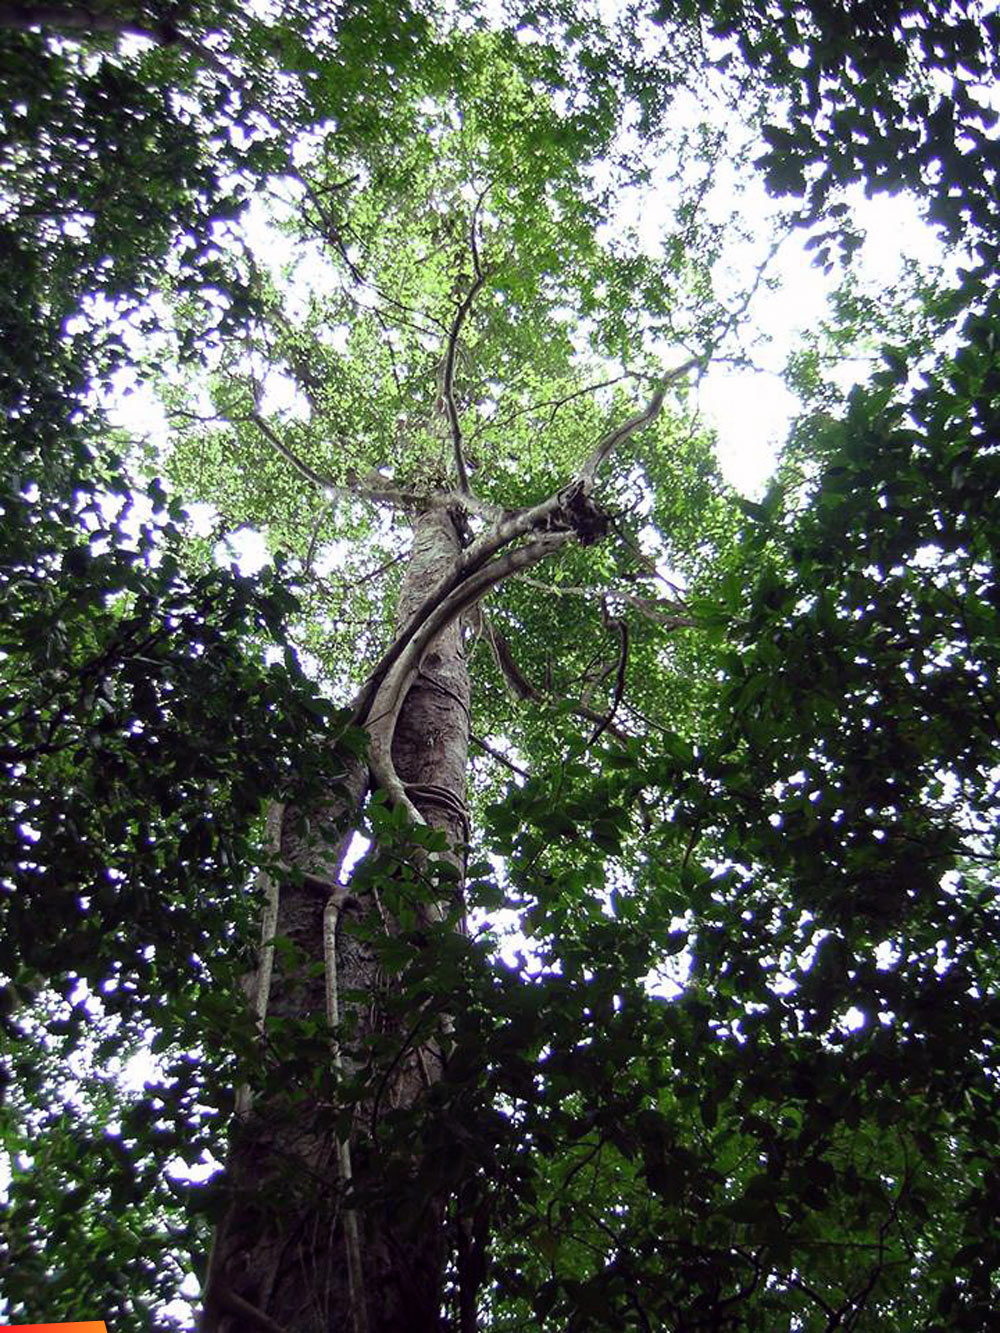 Breadnut tree, also called ramon